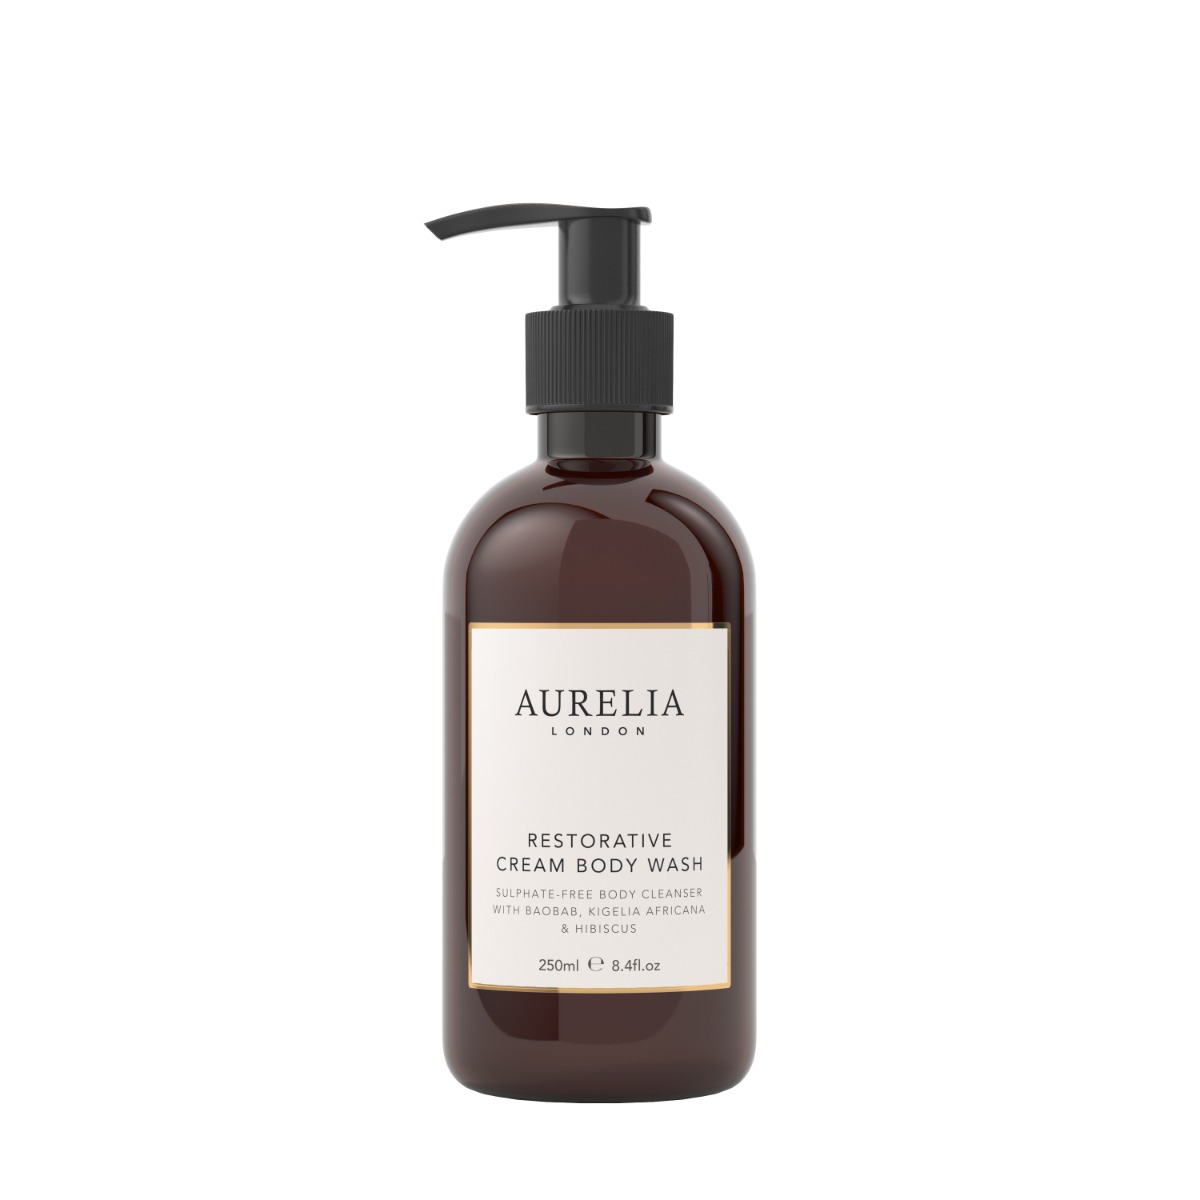 An image of Aurelia London, Restorative Cream Body Wash, 250ml